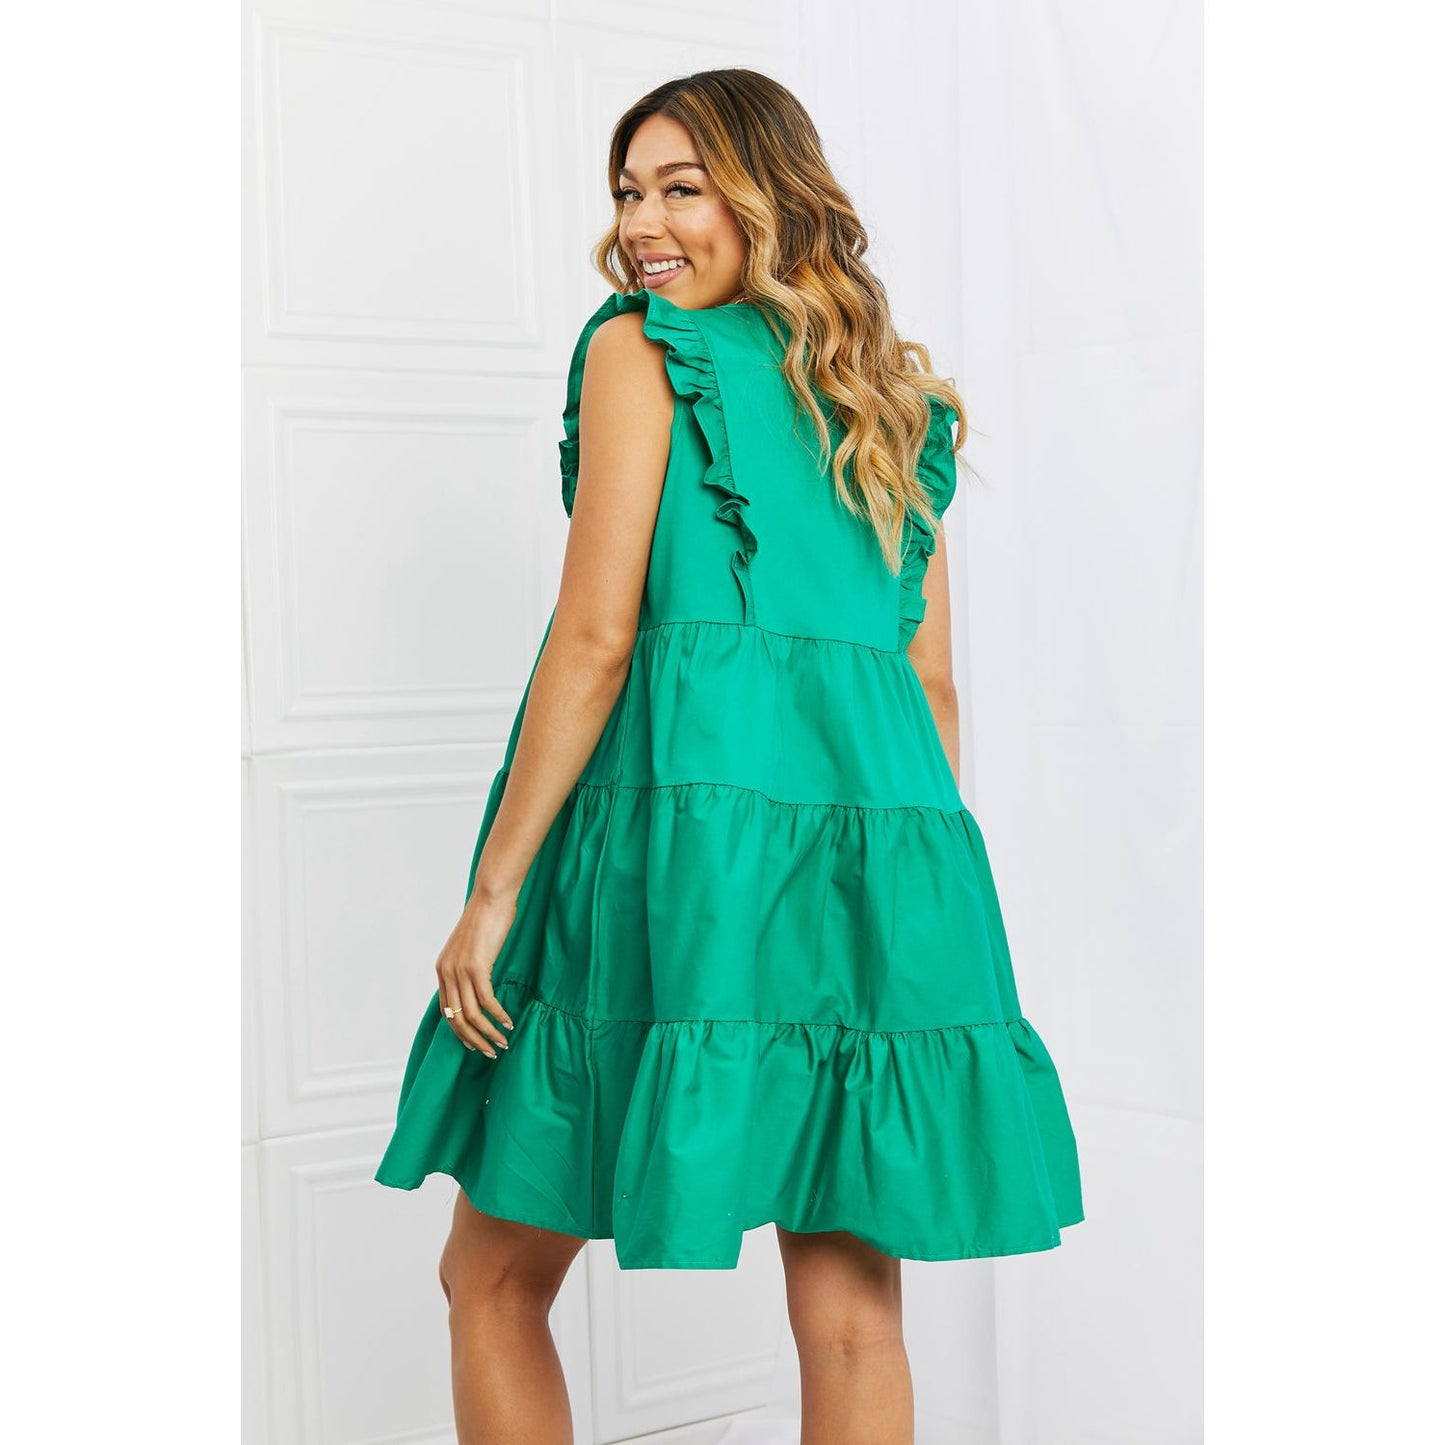 Hailey & Co Play Date Full Size Ruffle Dress - TiffanyzKlozet